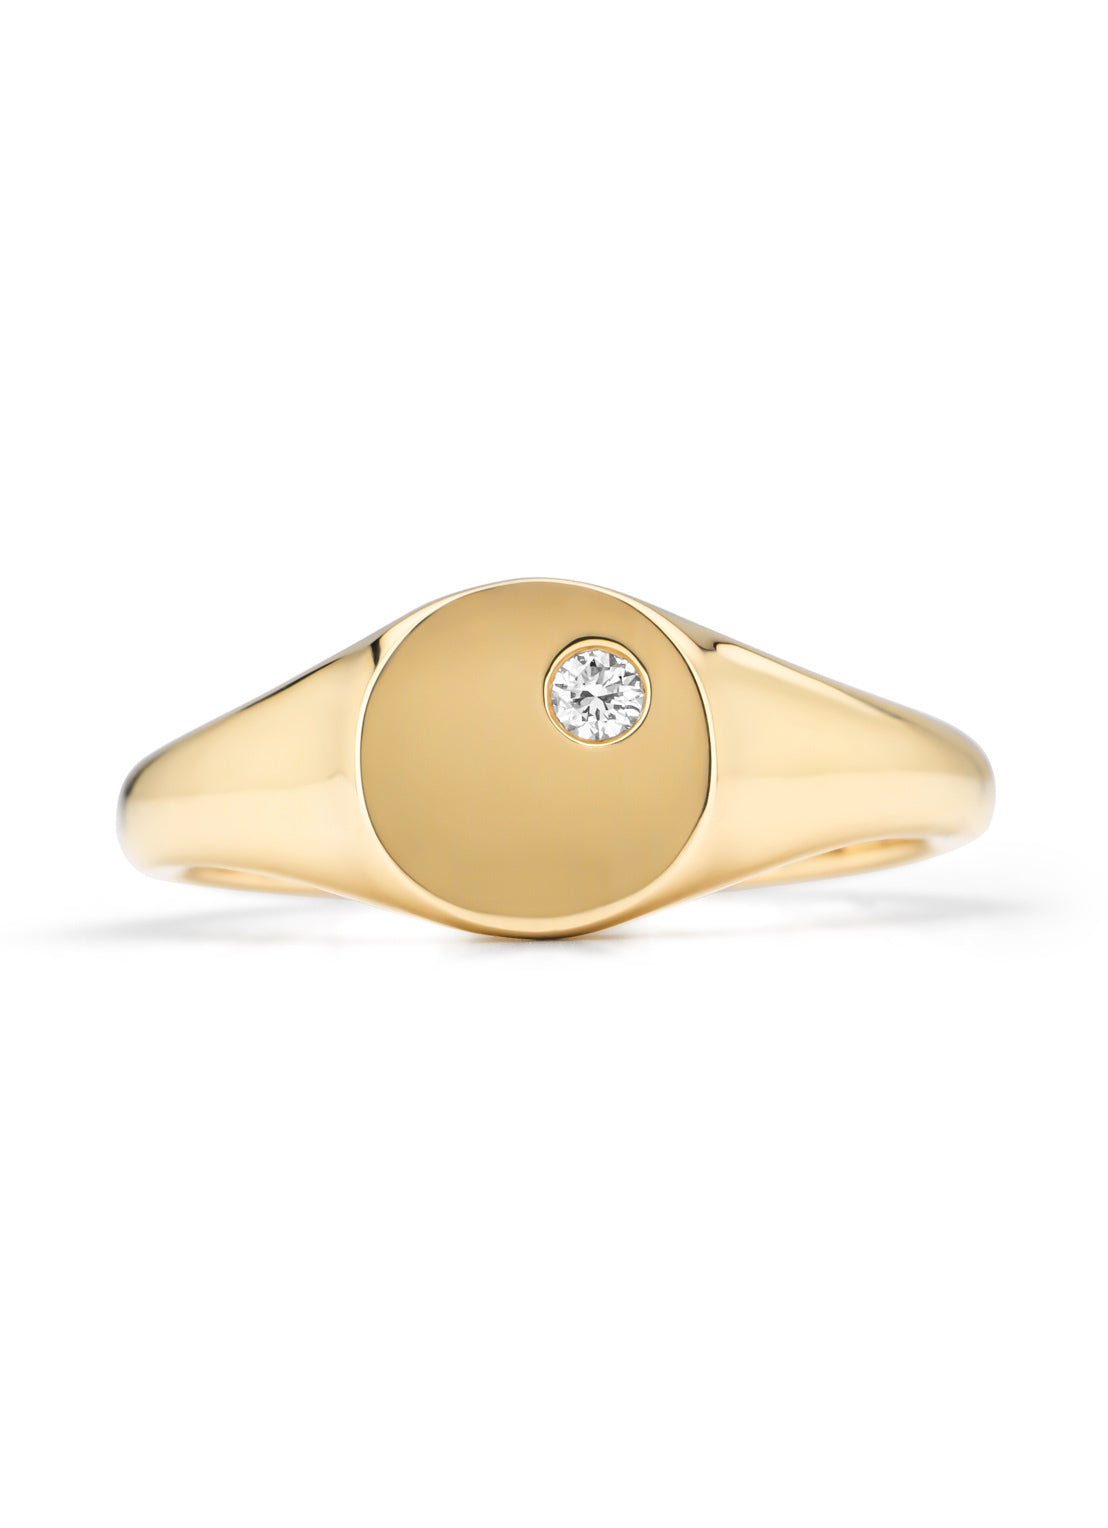 Yellow gold signet ring, 0.03 ct diamond, timeless treasures